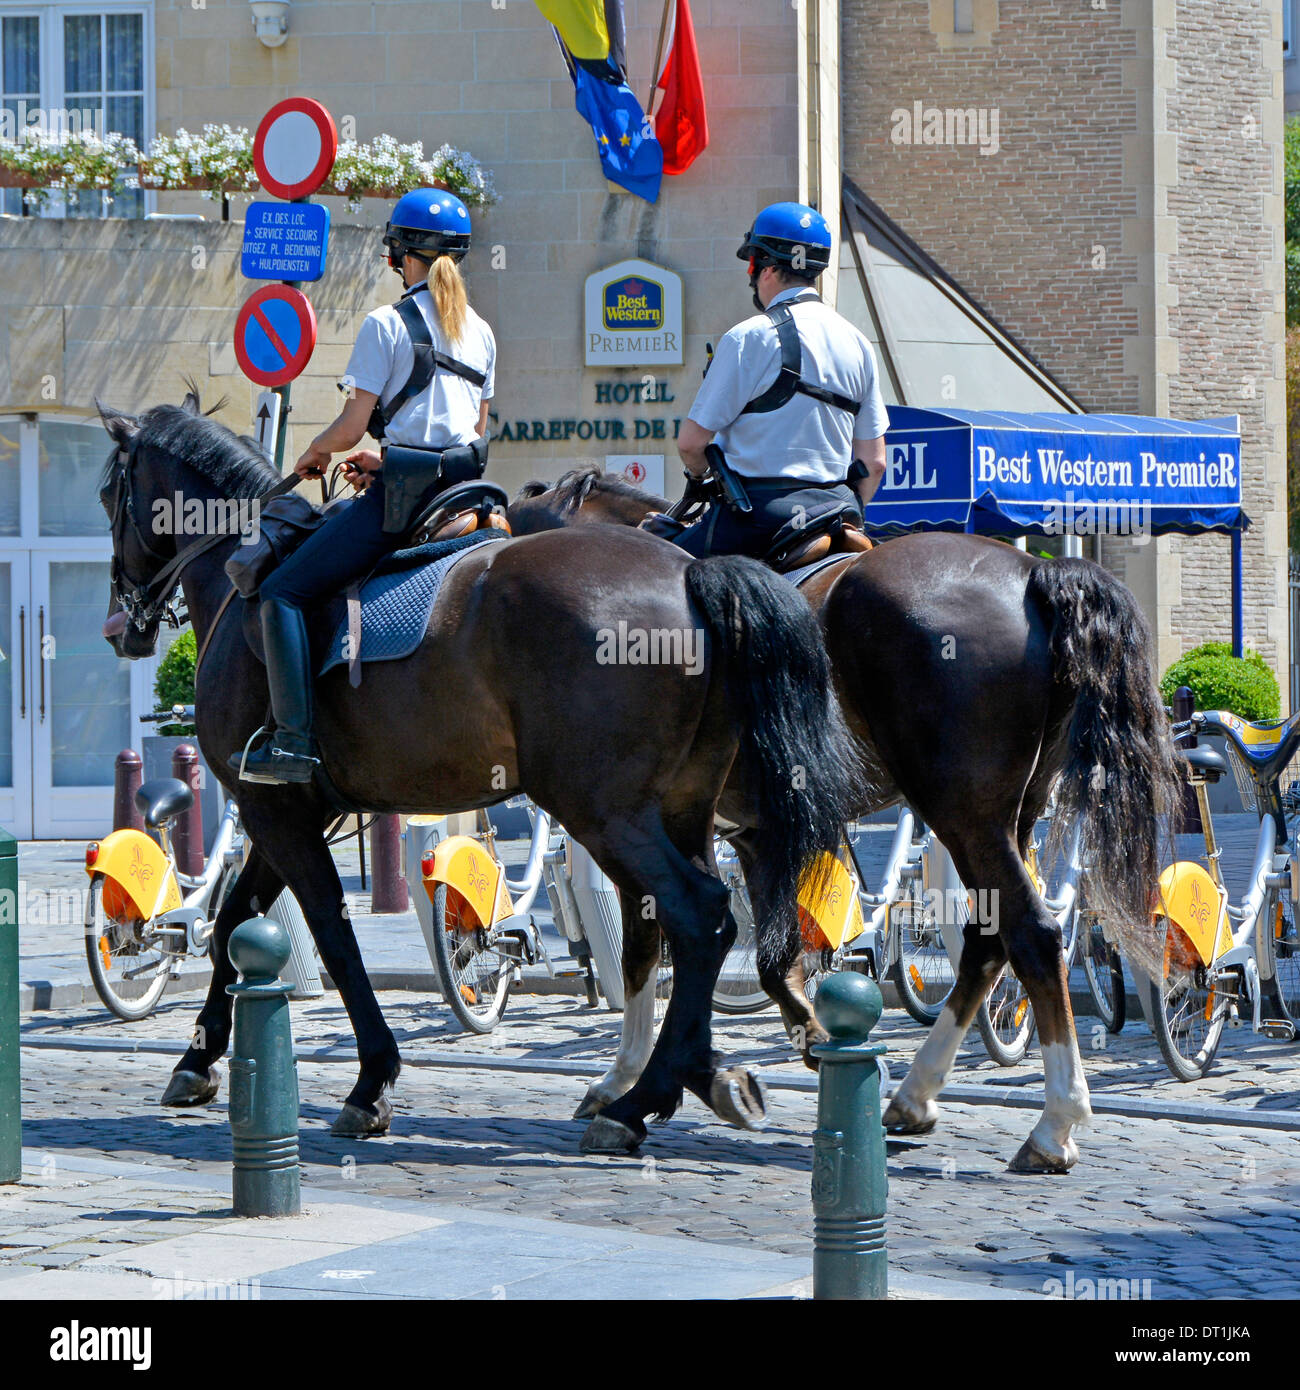 Mounted police officers patrolling on horseback in Brussels Belgium Stock Photo